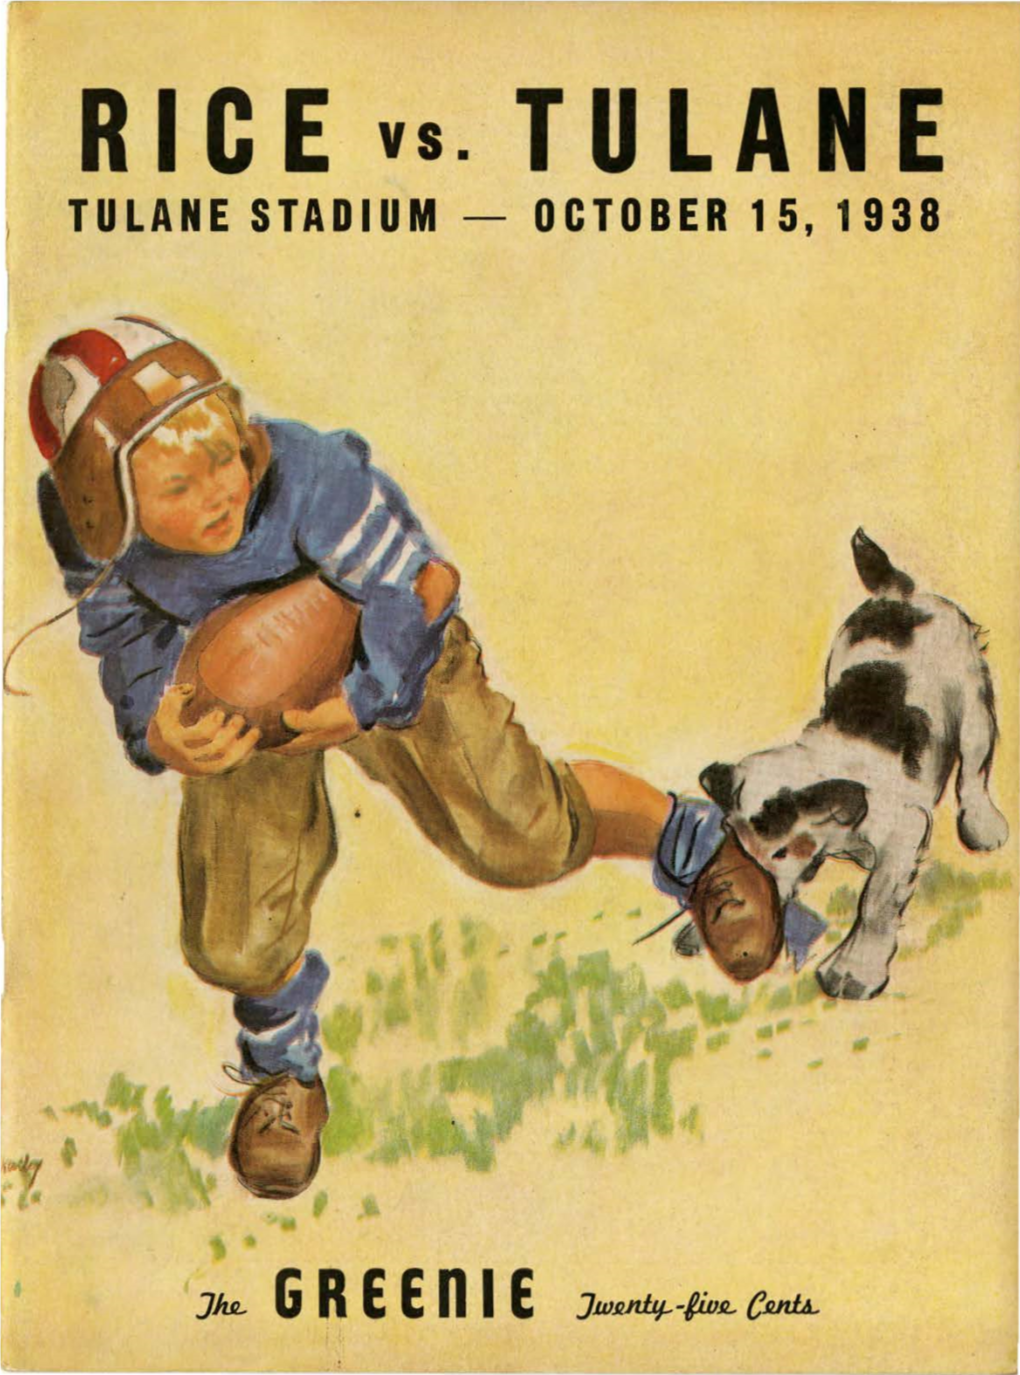 RICE Vs. TULANE TULANE STADIUM- OCTOBER 15, 1938 •